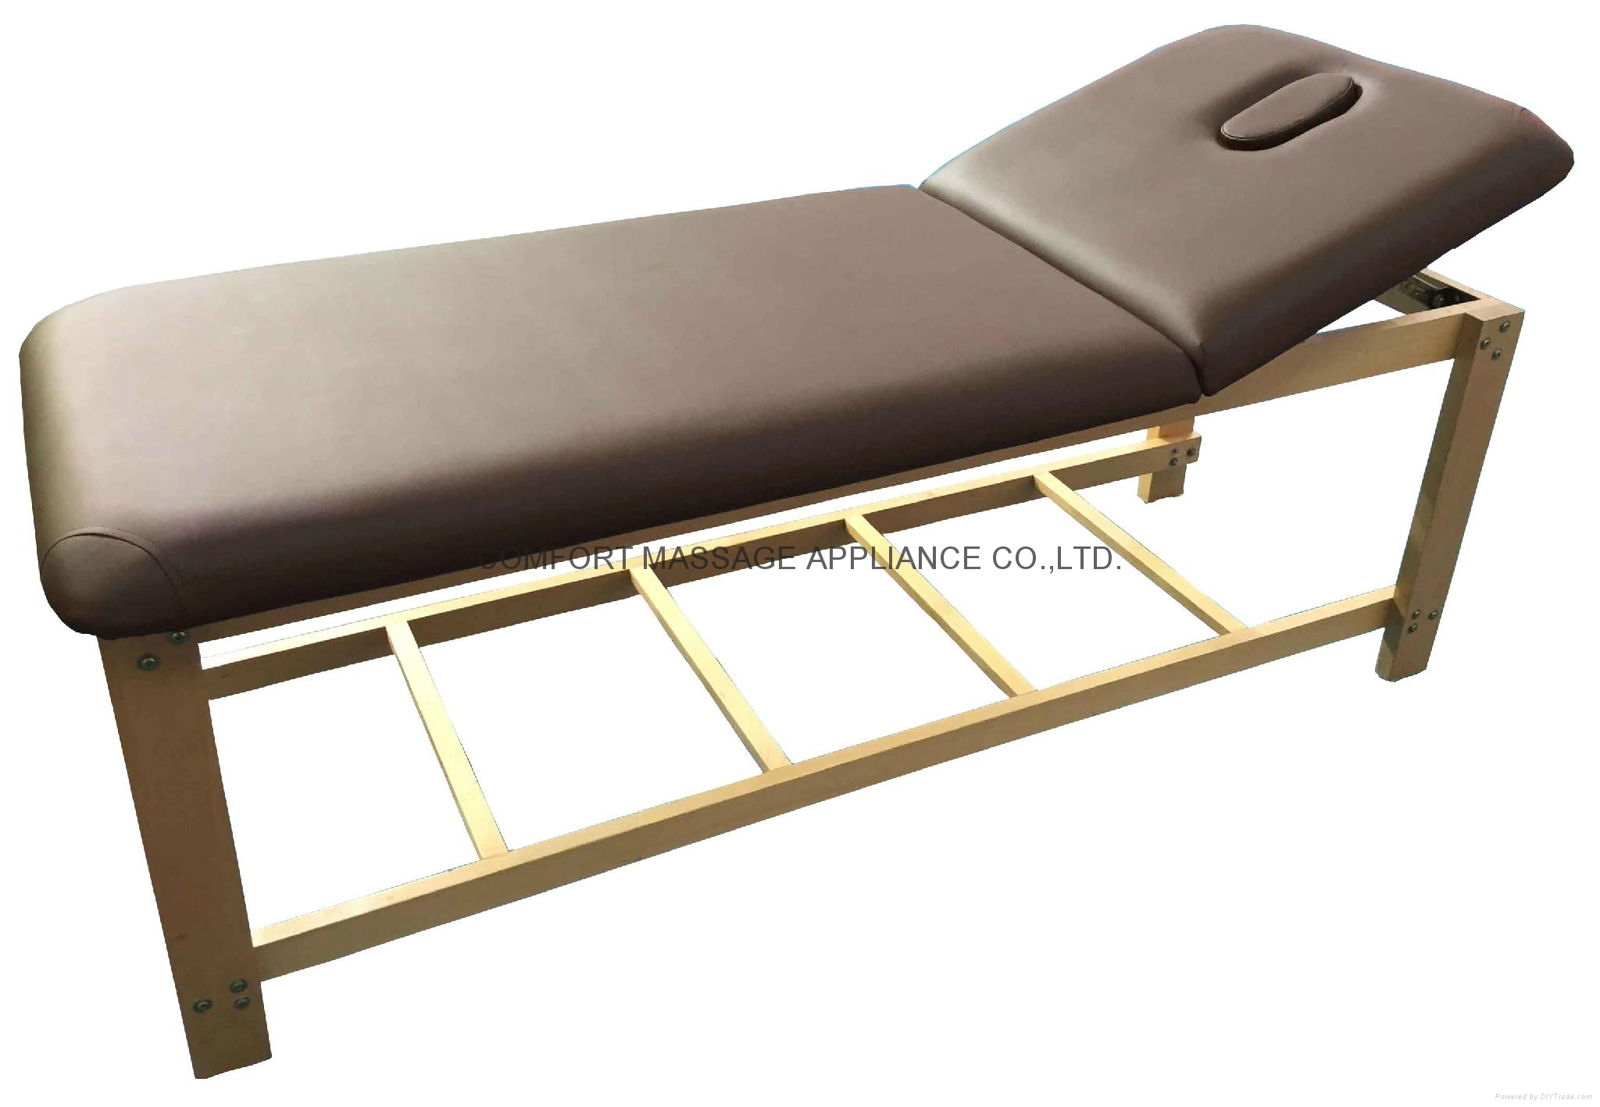 SM-007 disassembled stationary massage table with adjustable backrest 3